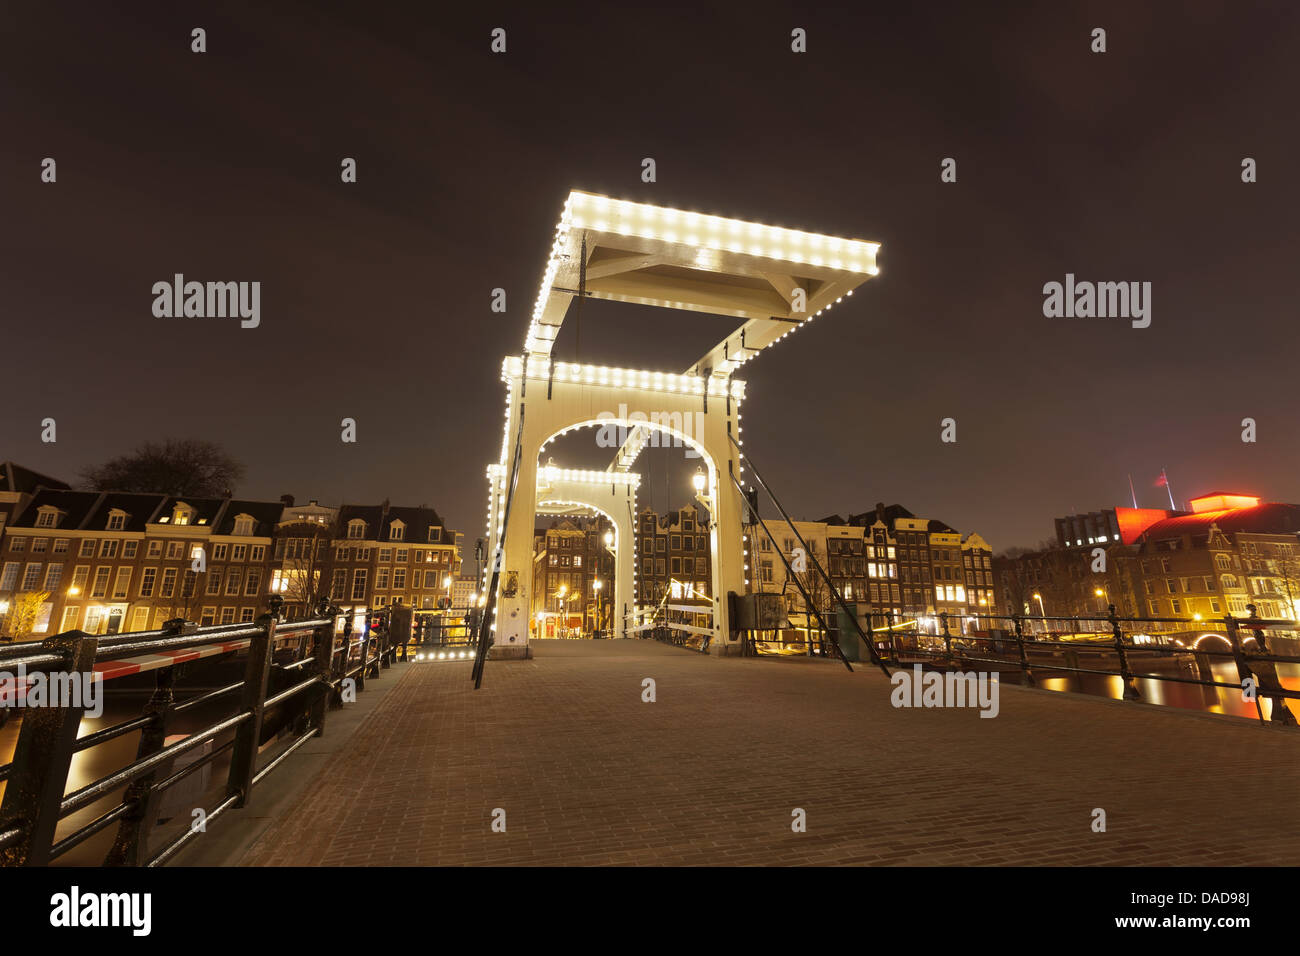 Magere Brug (Skinny Bridge), Amsterdam, Netherlands Stock Photo